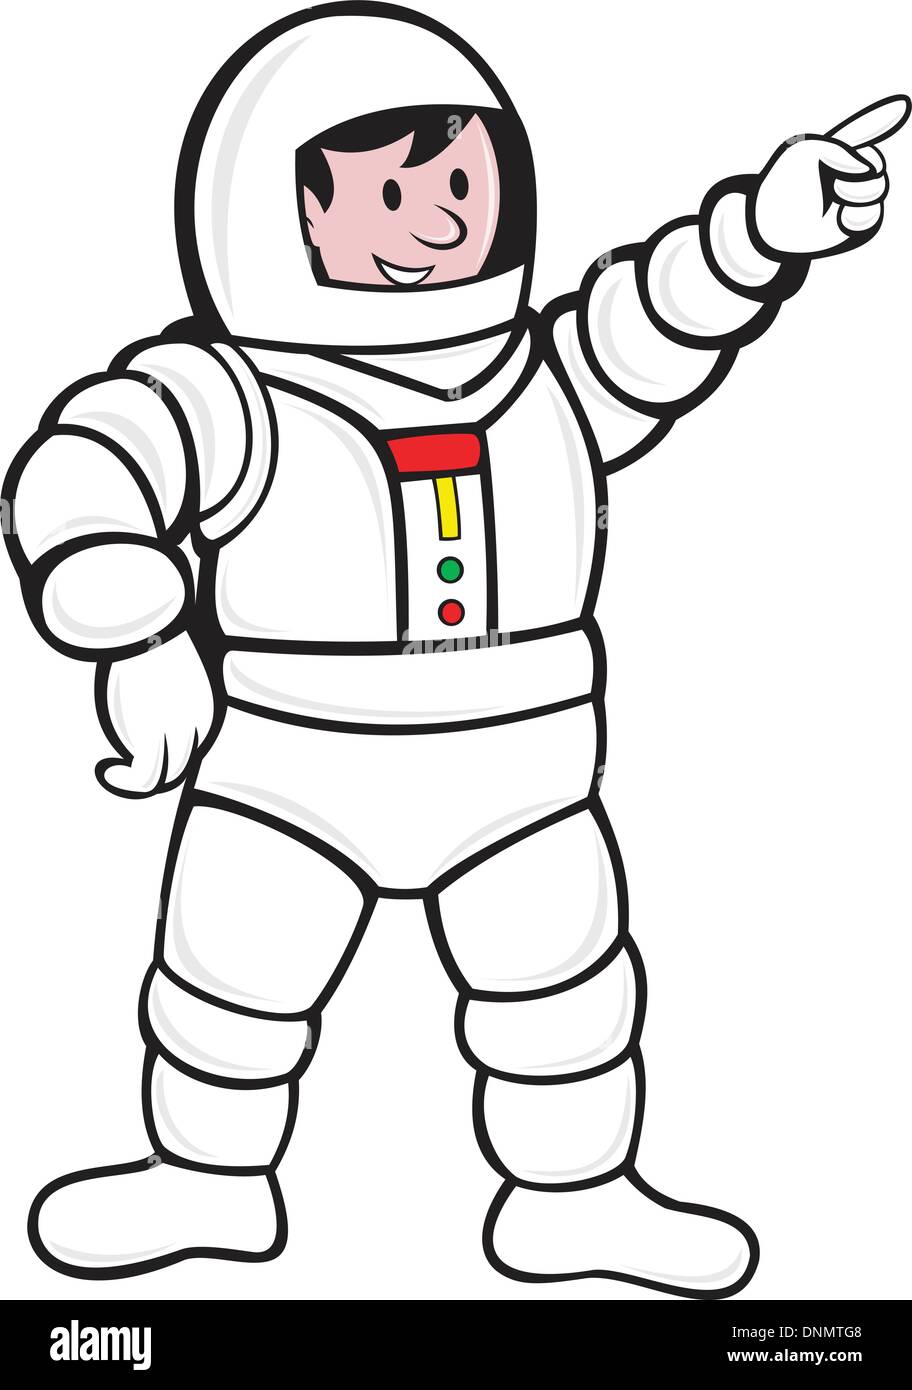 Cheetah Astronaut Mascot Stock Vector. illustration of an astronaut standin...